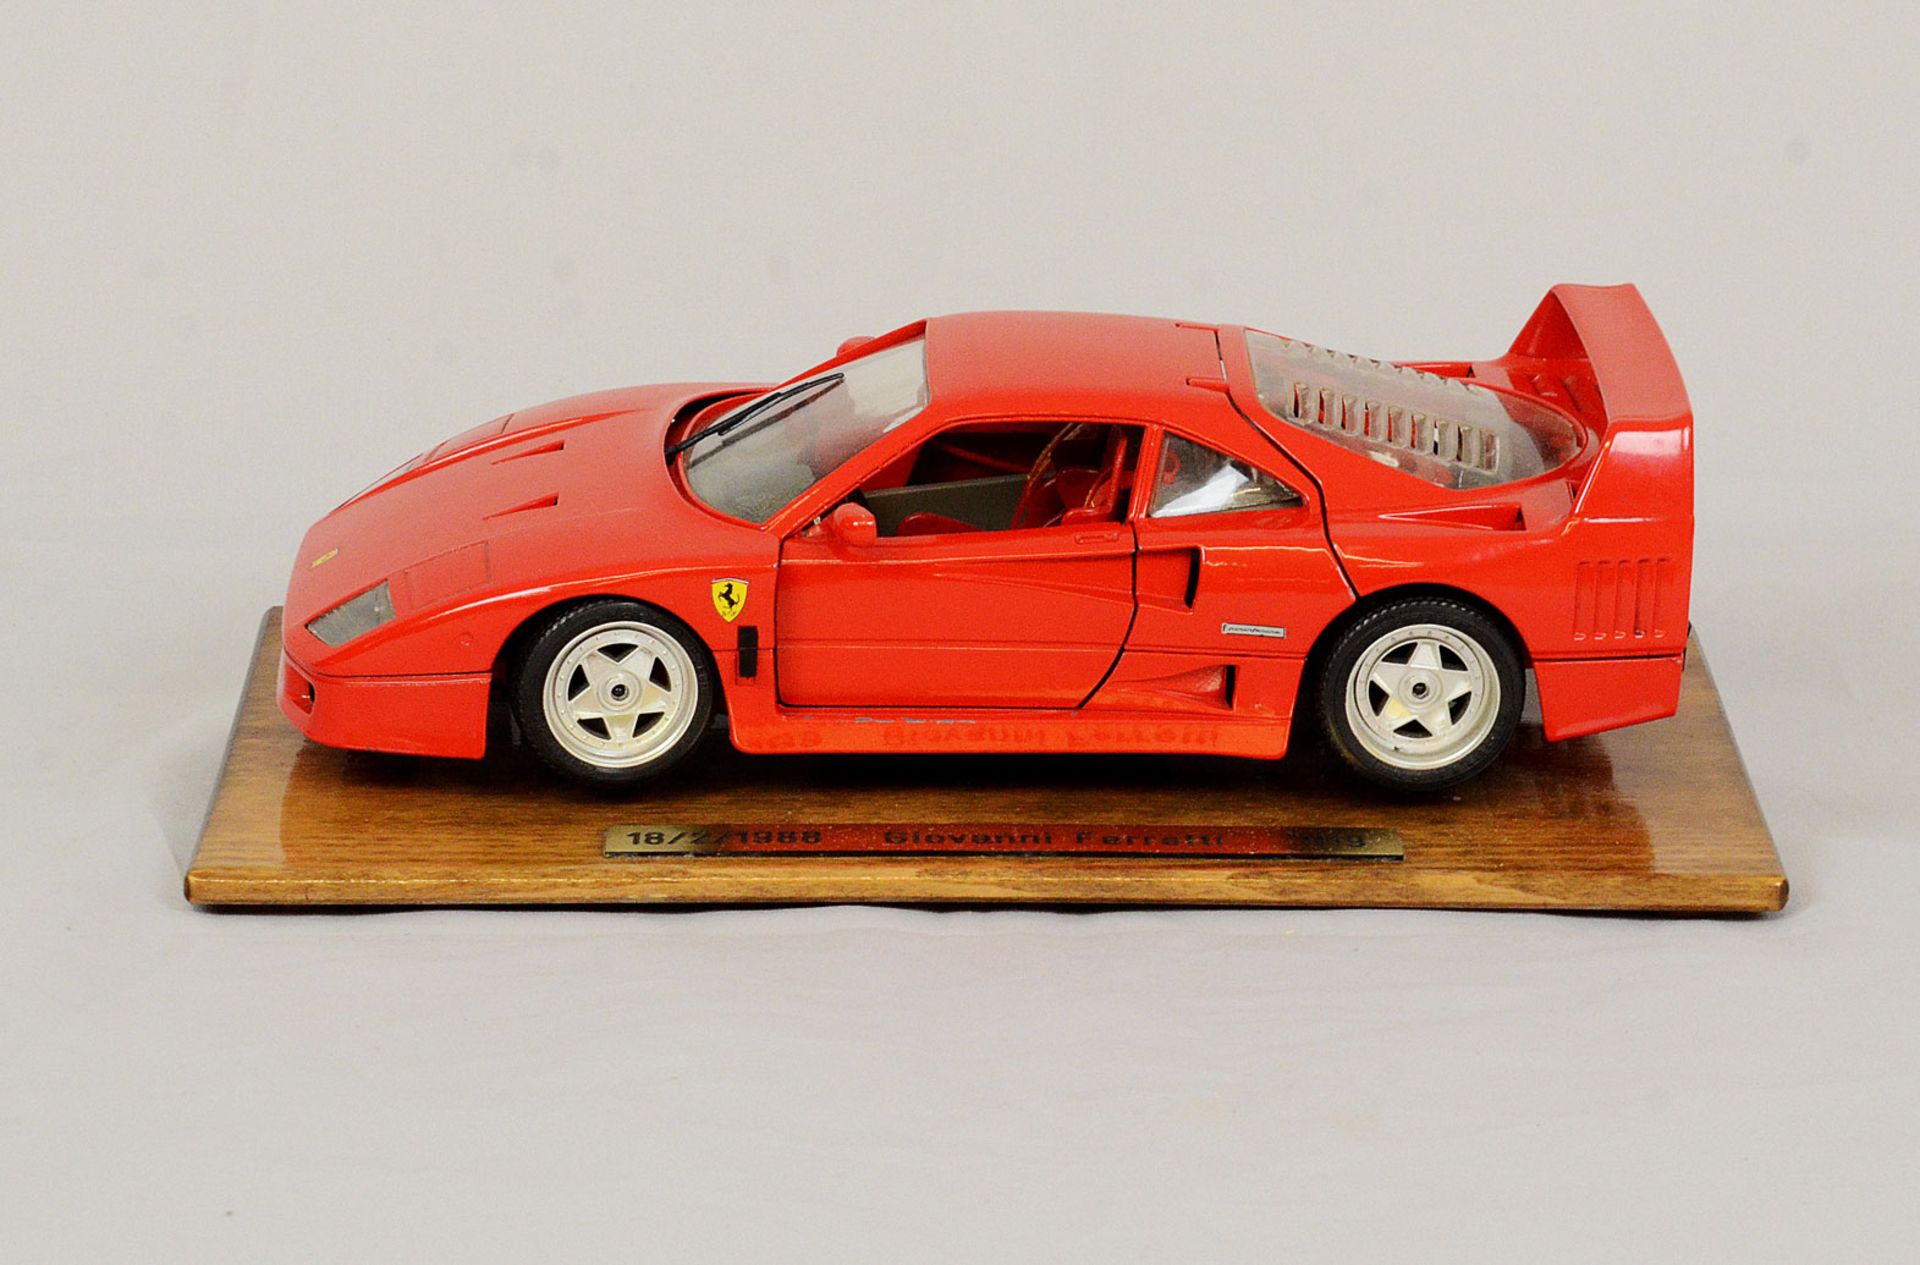 Burago Ferrari F40 1:18 scale model car